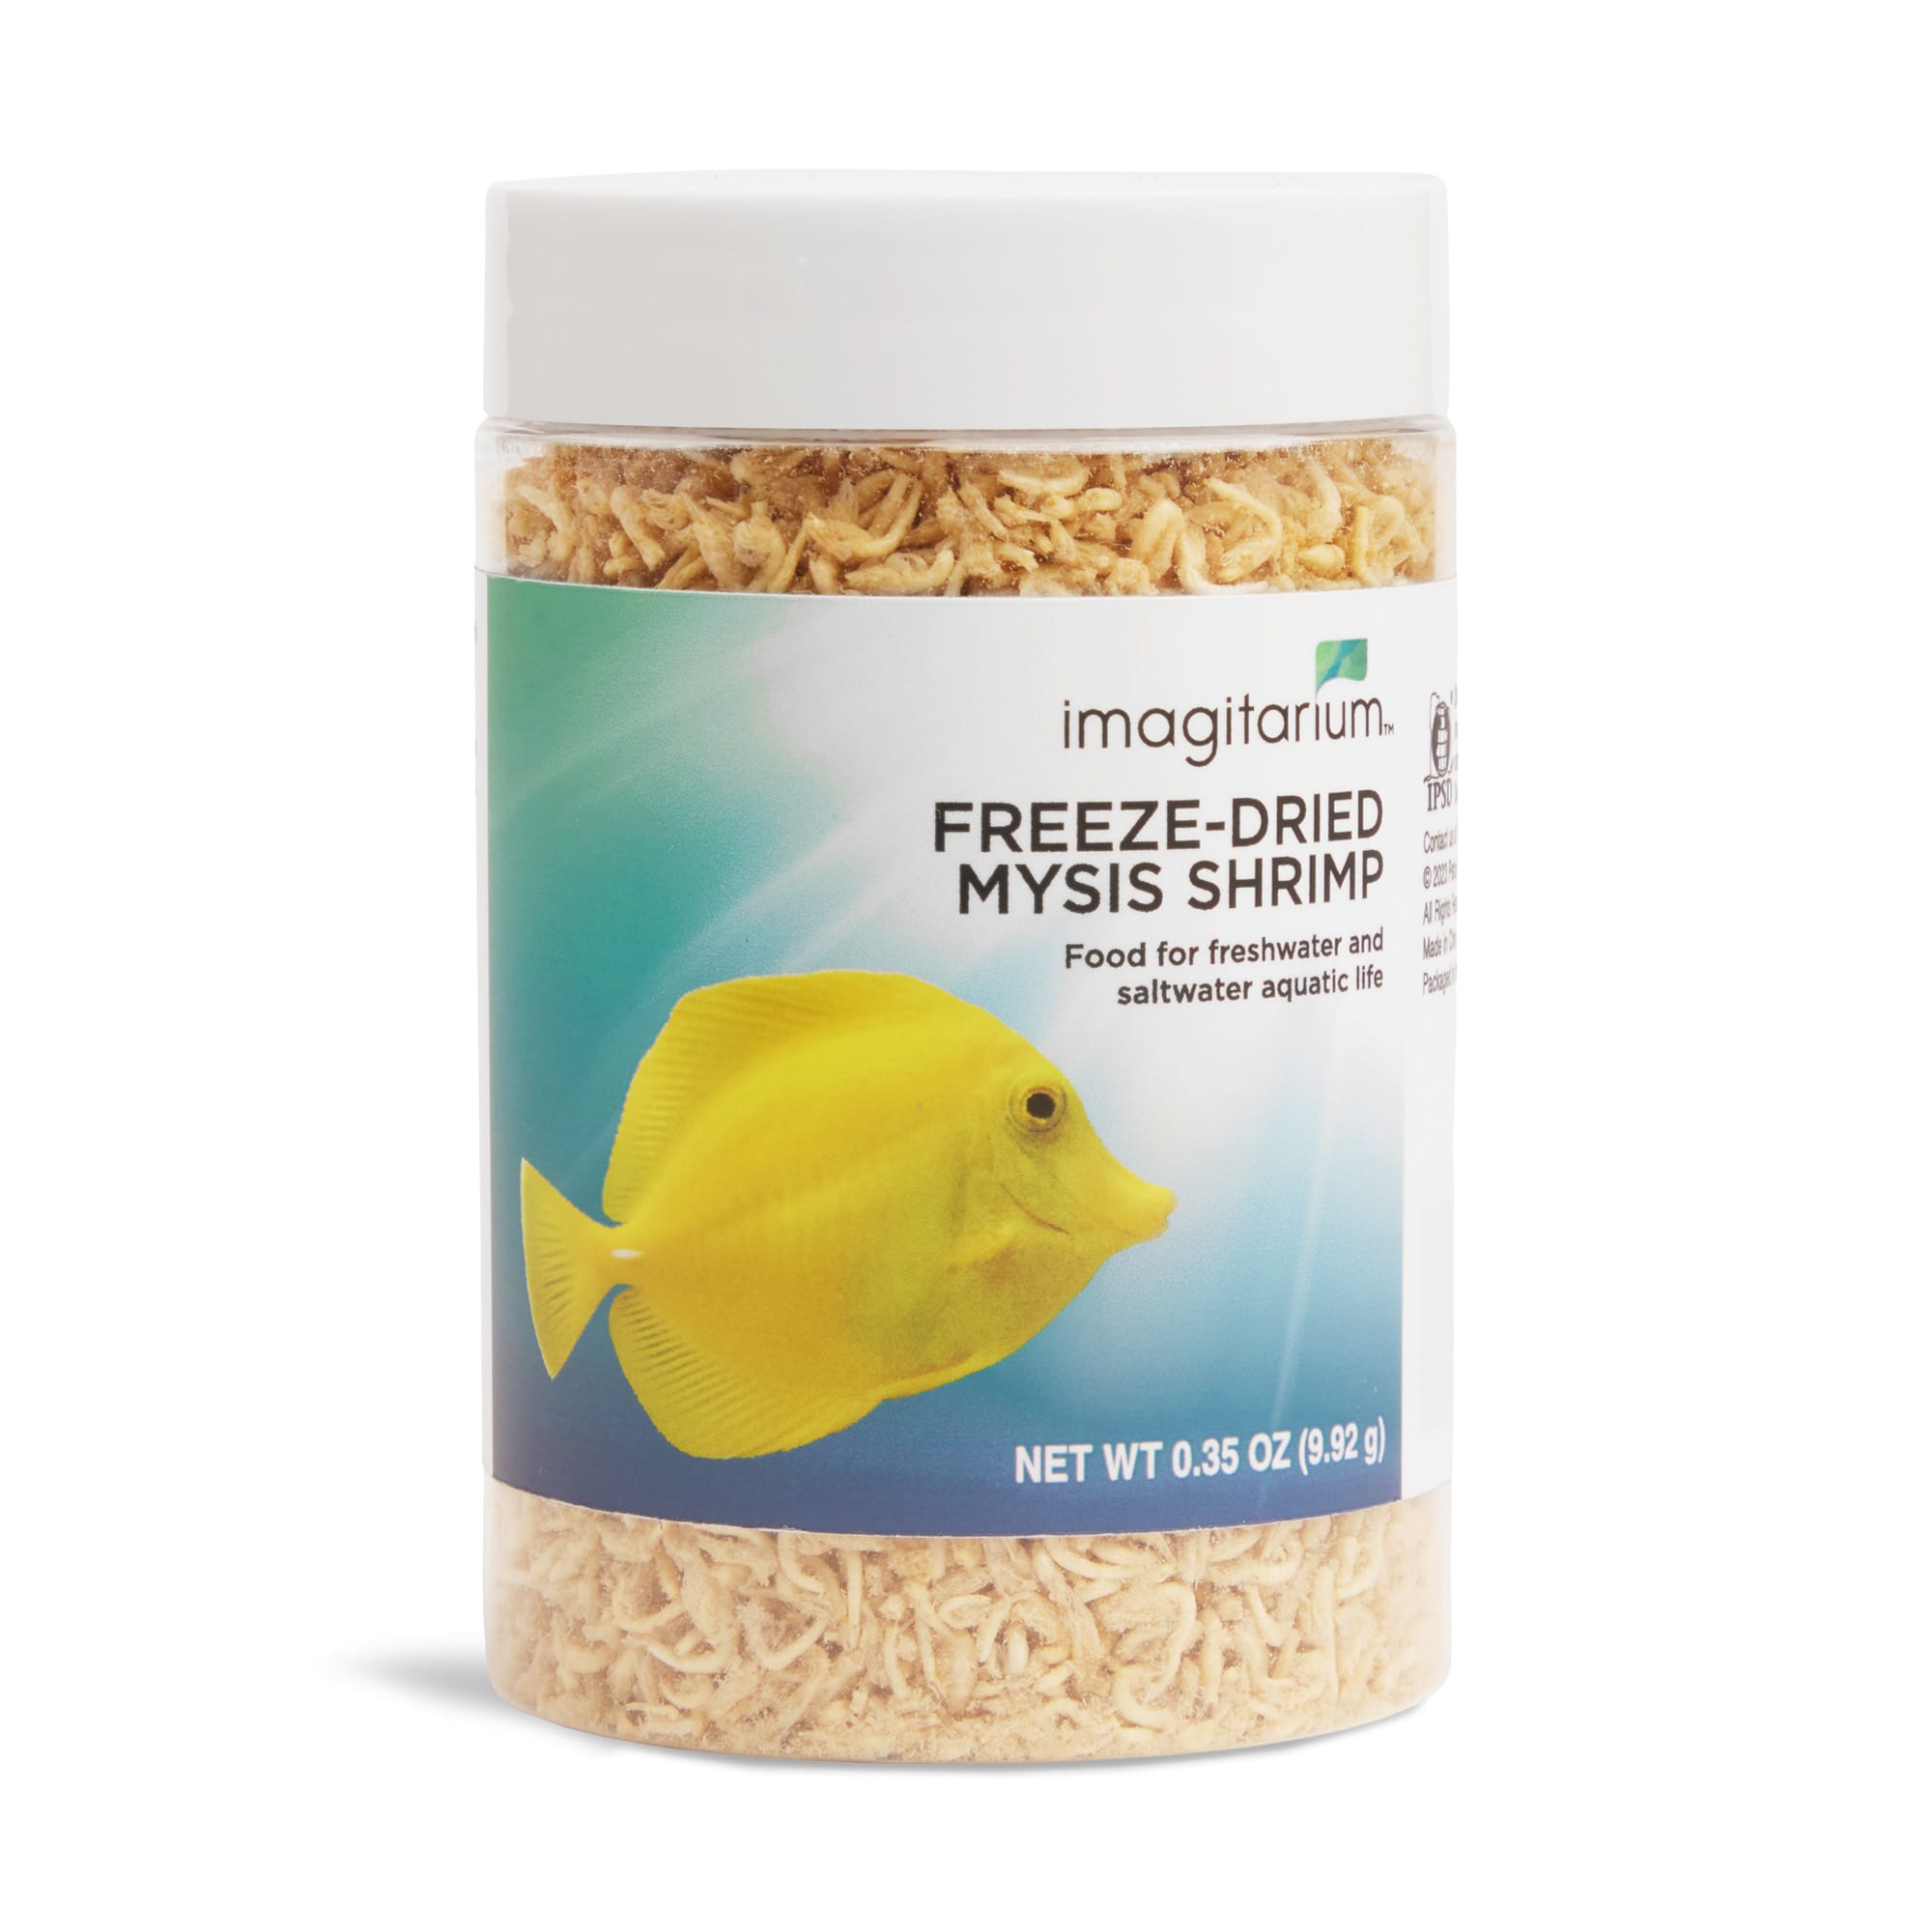 Imagitarium Freeze-Dried Mysis Shrimp Food for Freswater and Salt Water  Aquatic Life, 0.35 oz.